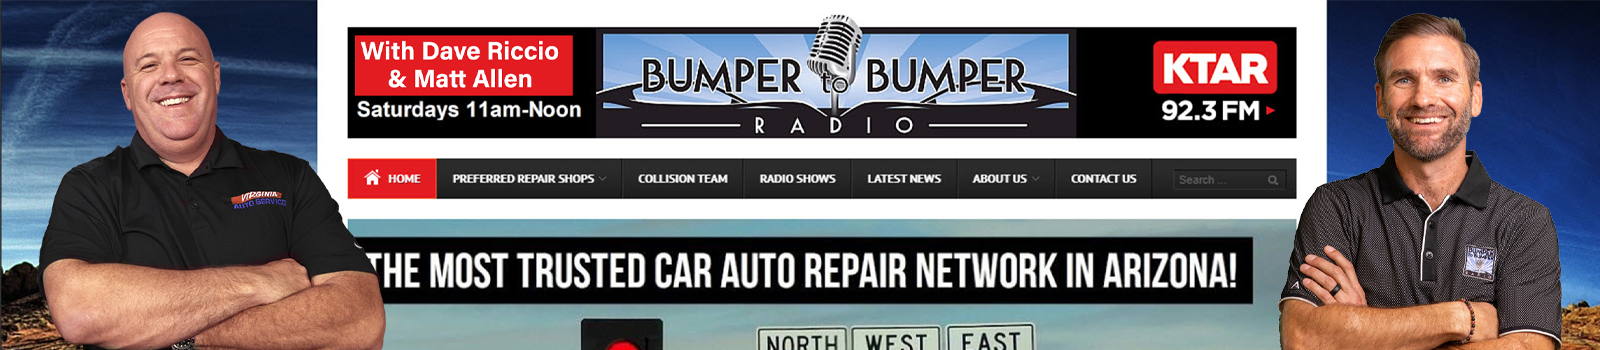 Dave Riccio: Host of Bumper to Bumper Radio on KTAR 92.3 Radio in Phoenix, AZ.